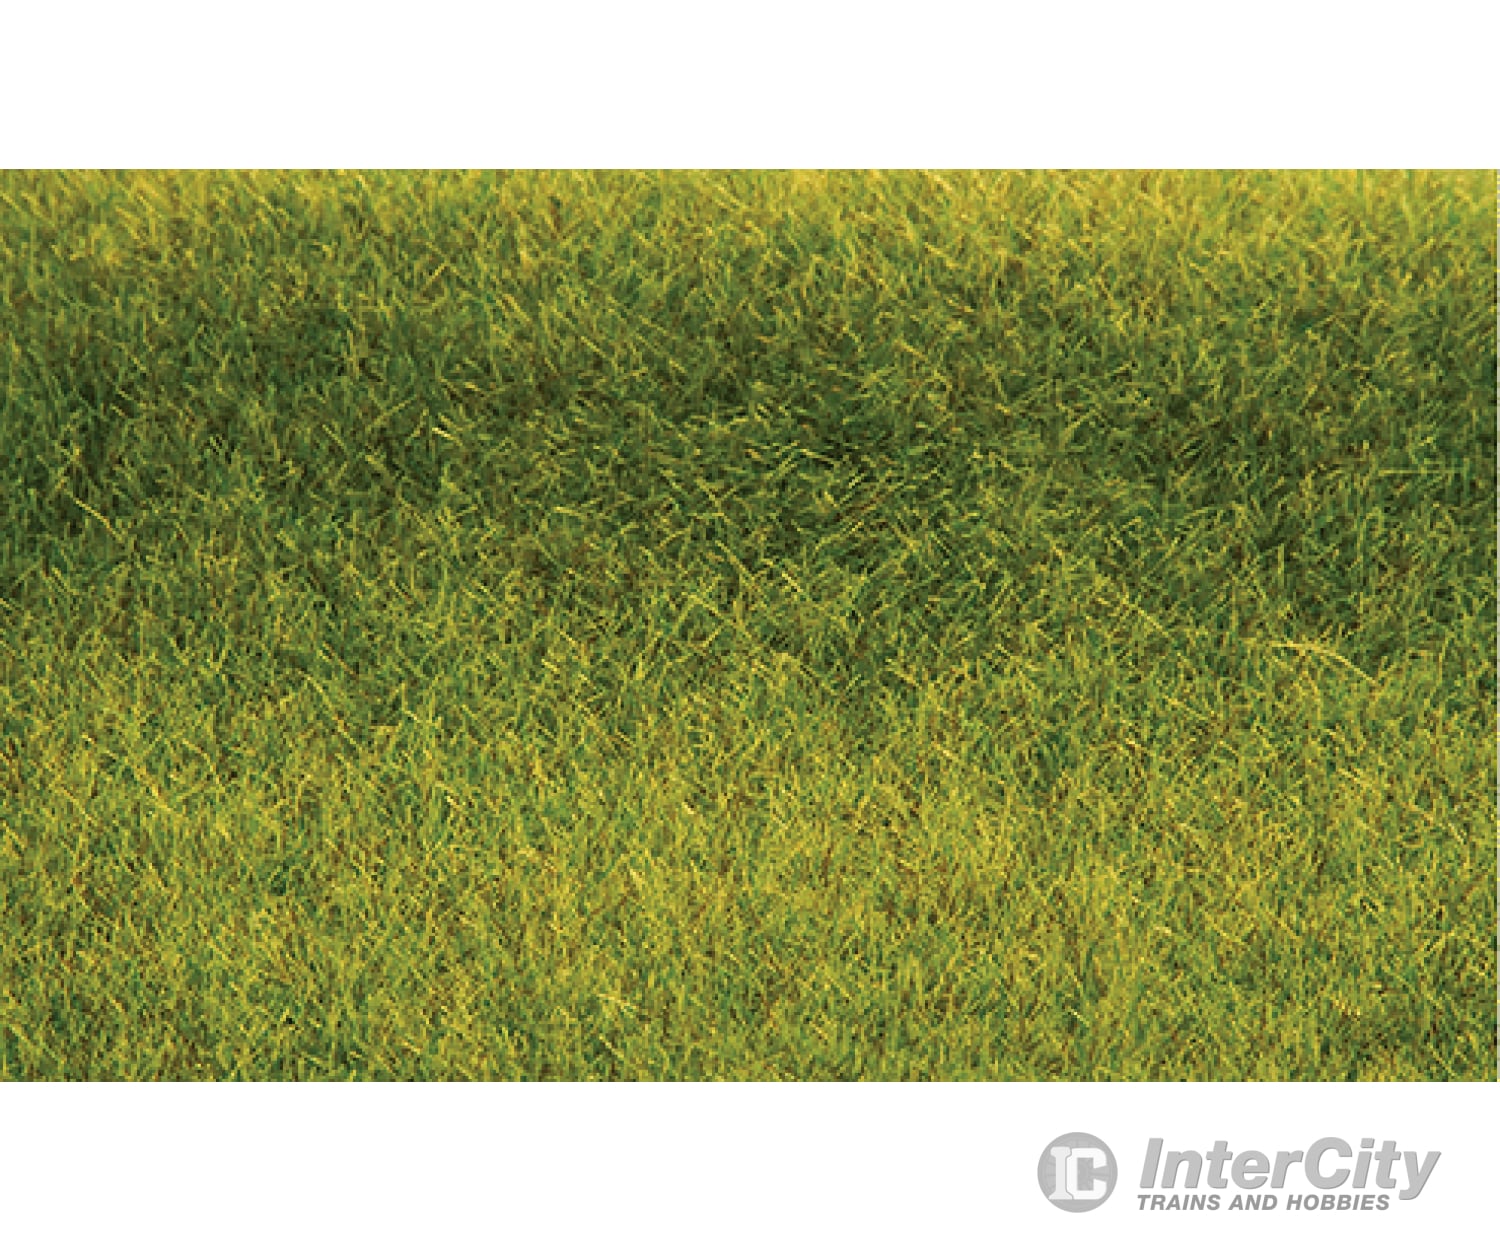 Heki 1861 Tuftgrass(R) Pad - 17-1/2 X 6-1/2 44.5 16.5Cm -- Pasture Green Grass & Scenery Mats